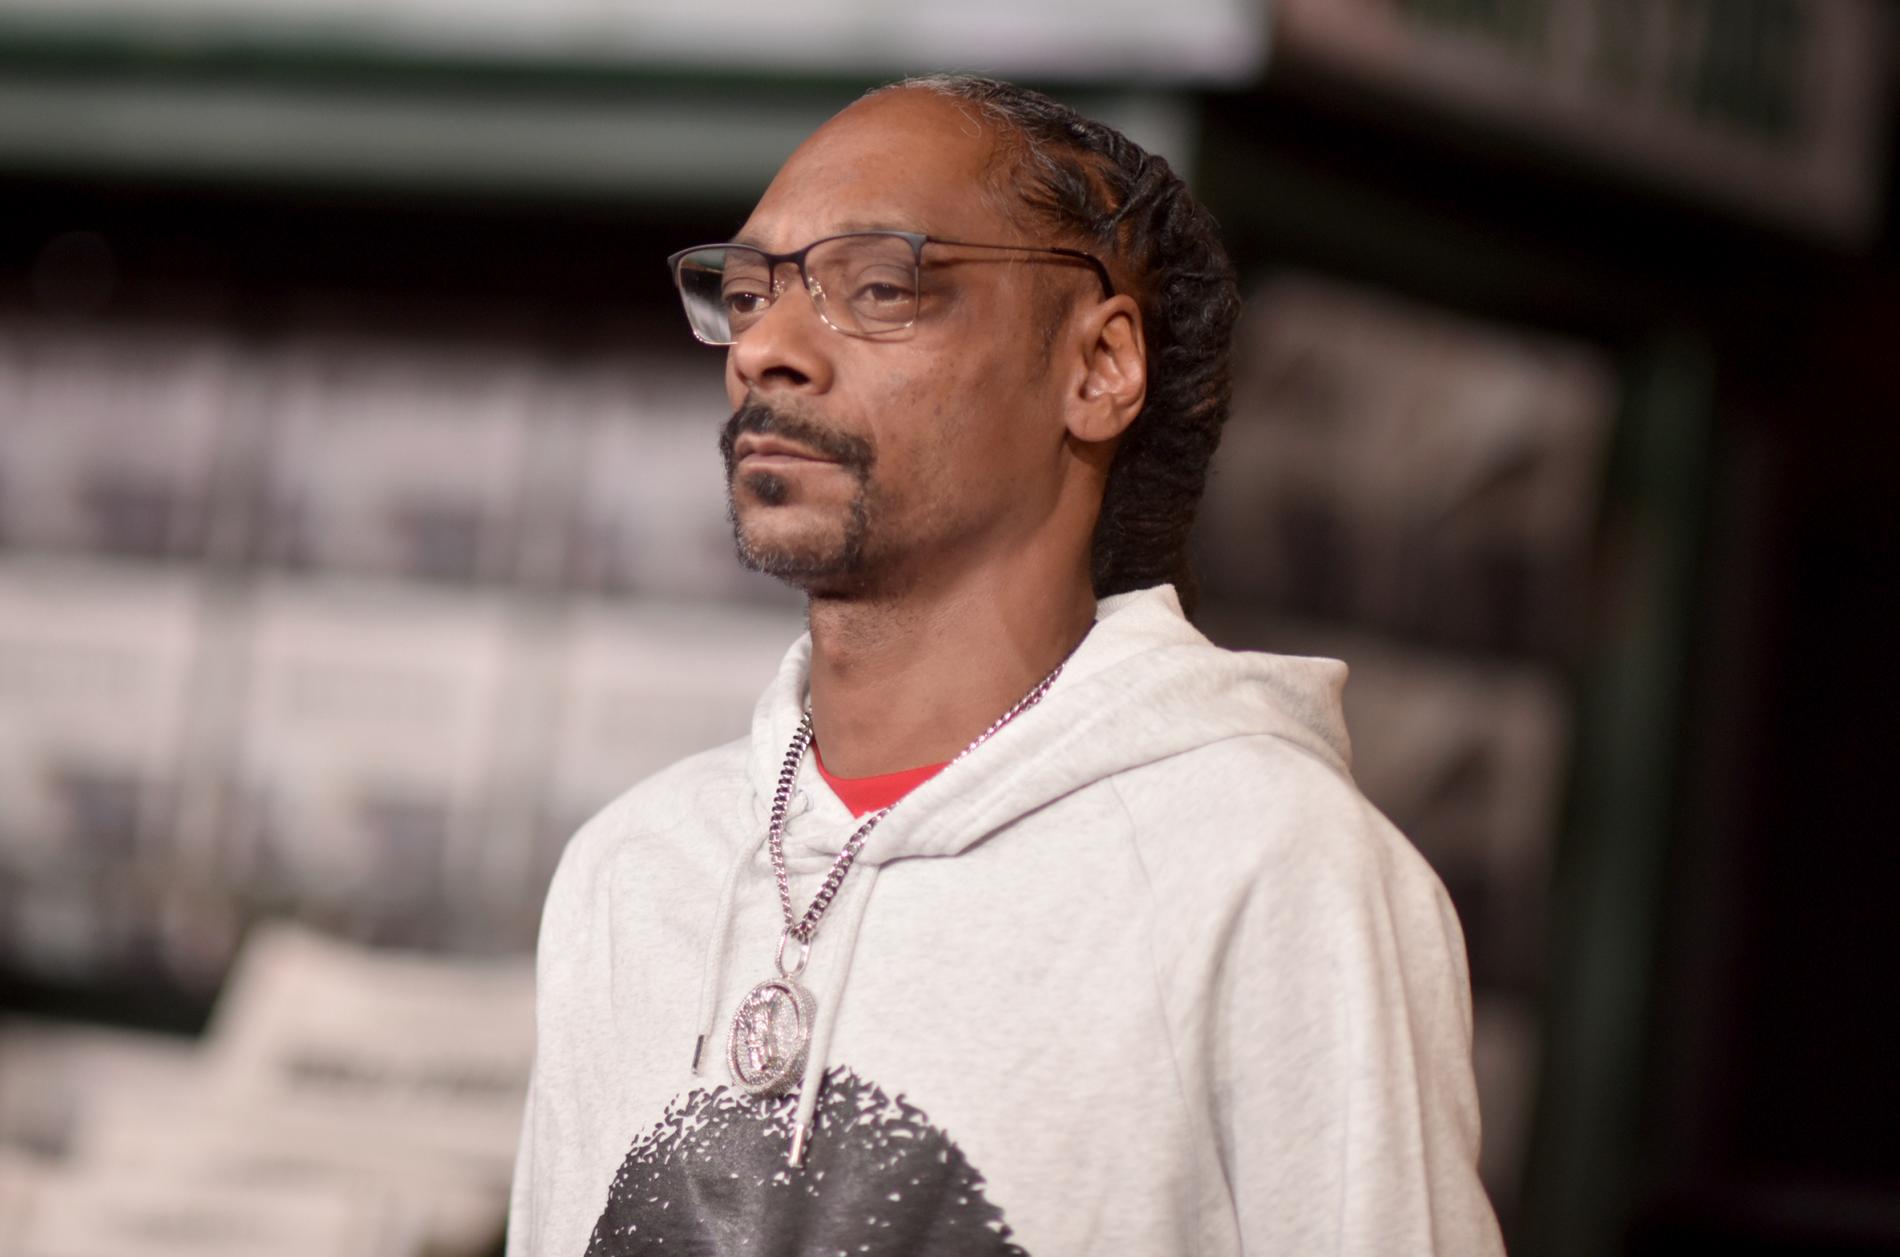 Snoop Dogg släpper ett nytt album i med titeln "Take it from AG" i december. Arkivbild.